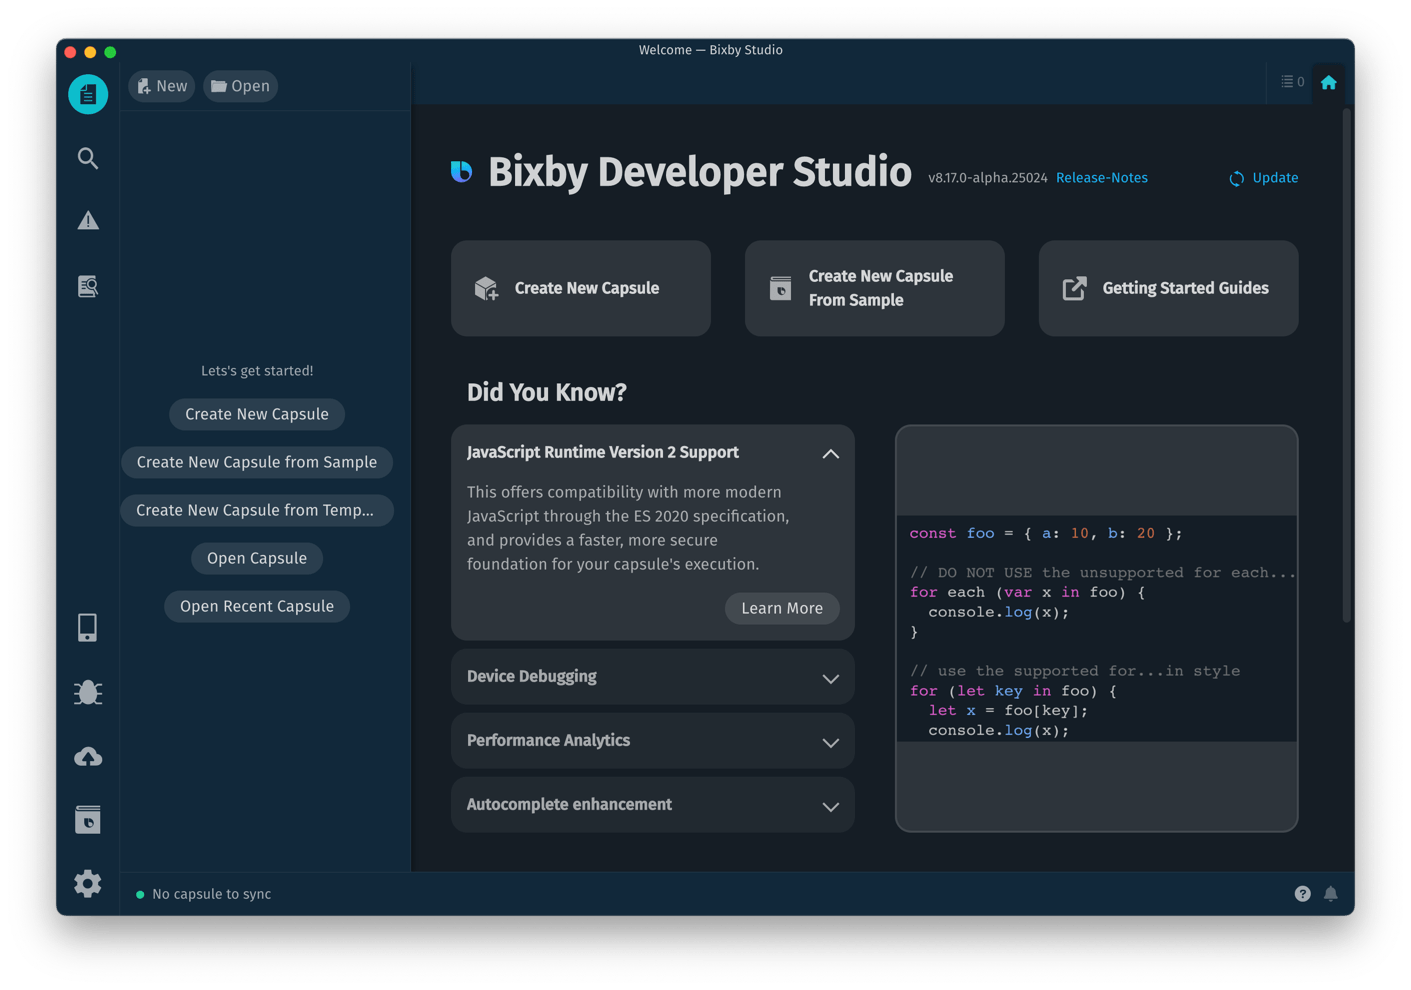 Bixby Developer Studio welcome page